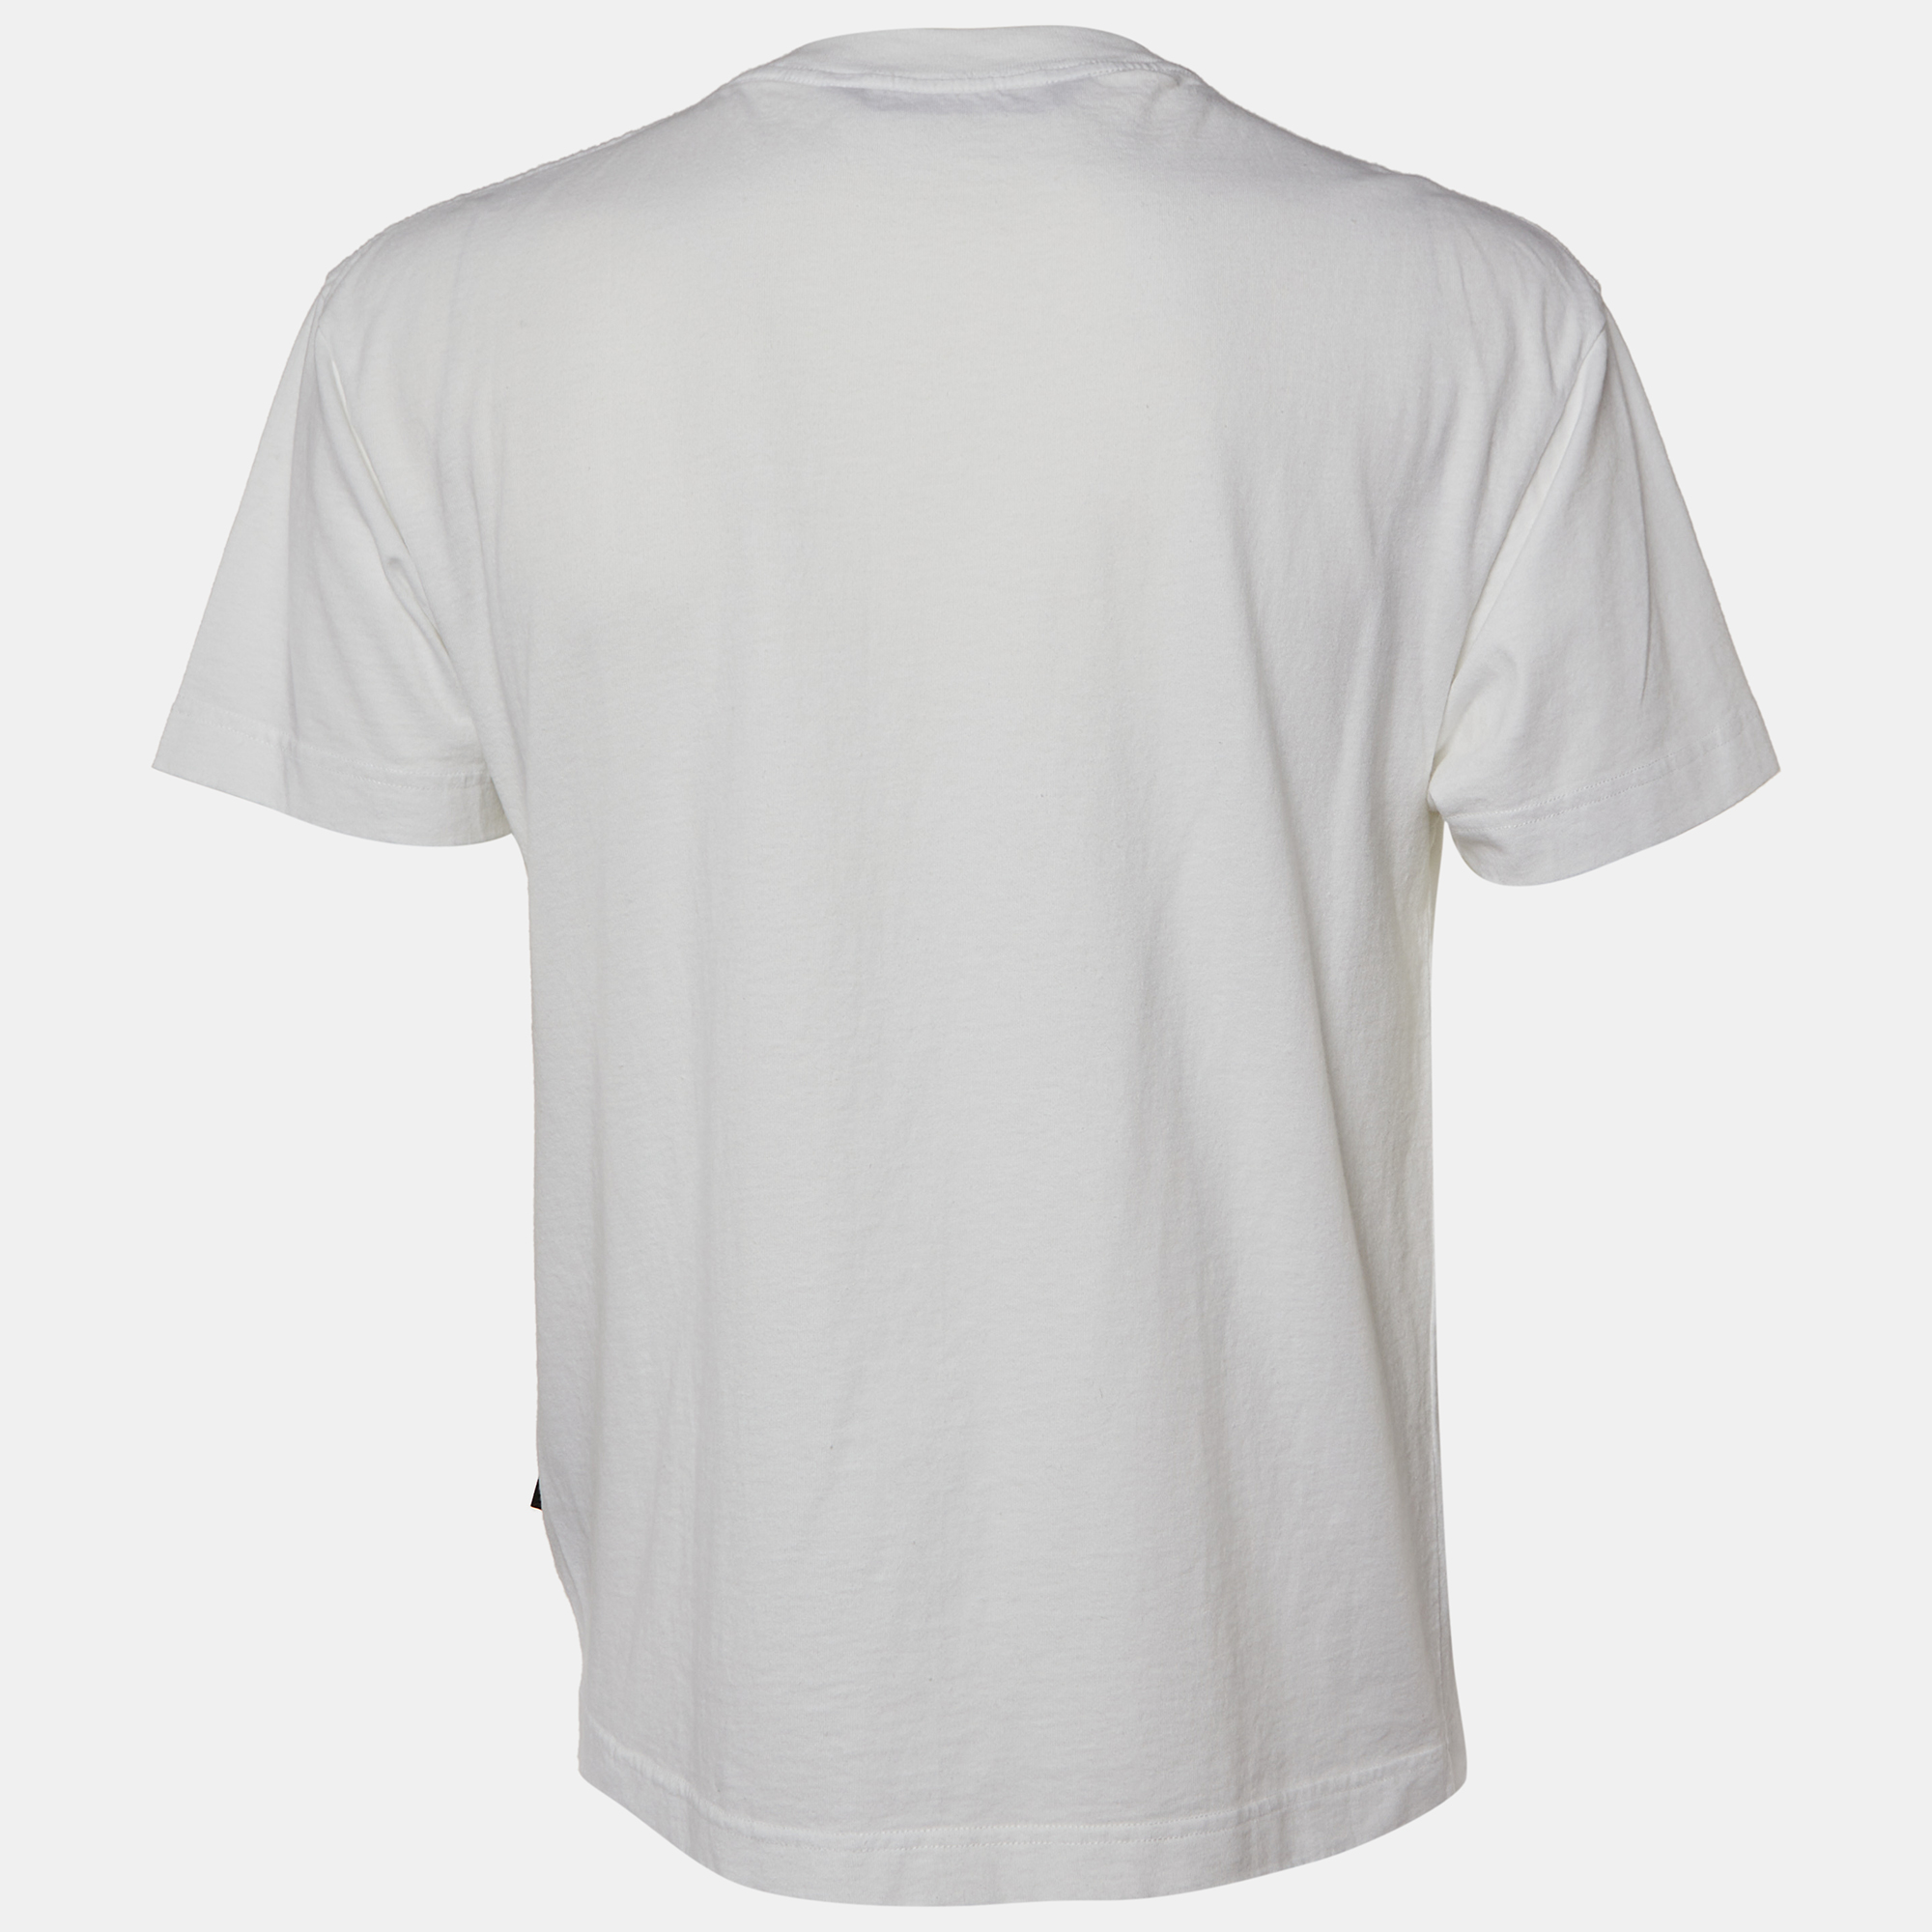 Palm Angels White Palm Sprayed Logo Printed Cotton Knit Crew Neck T-Shirt S